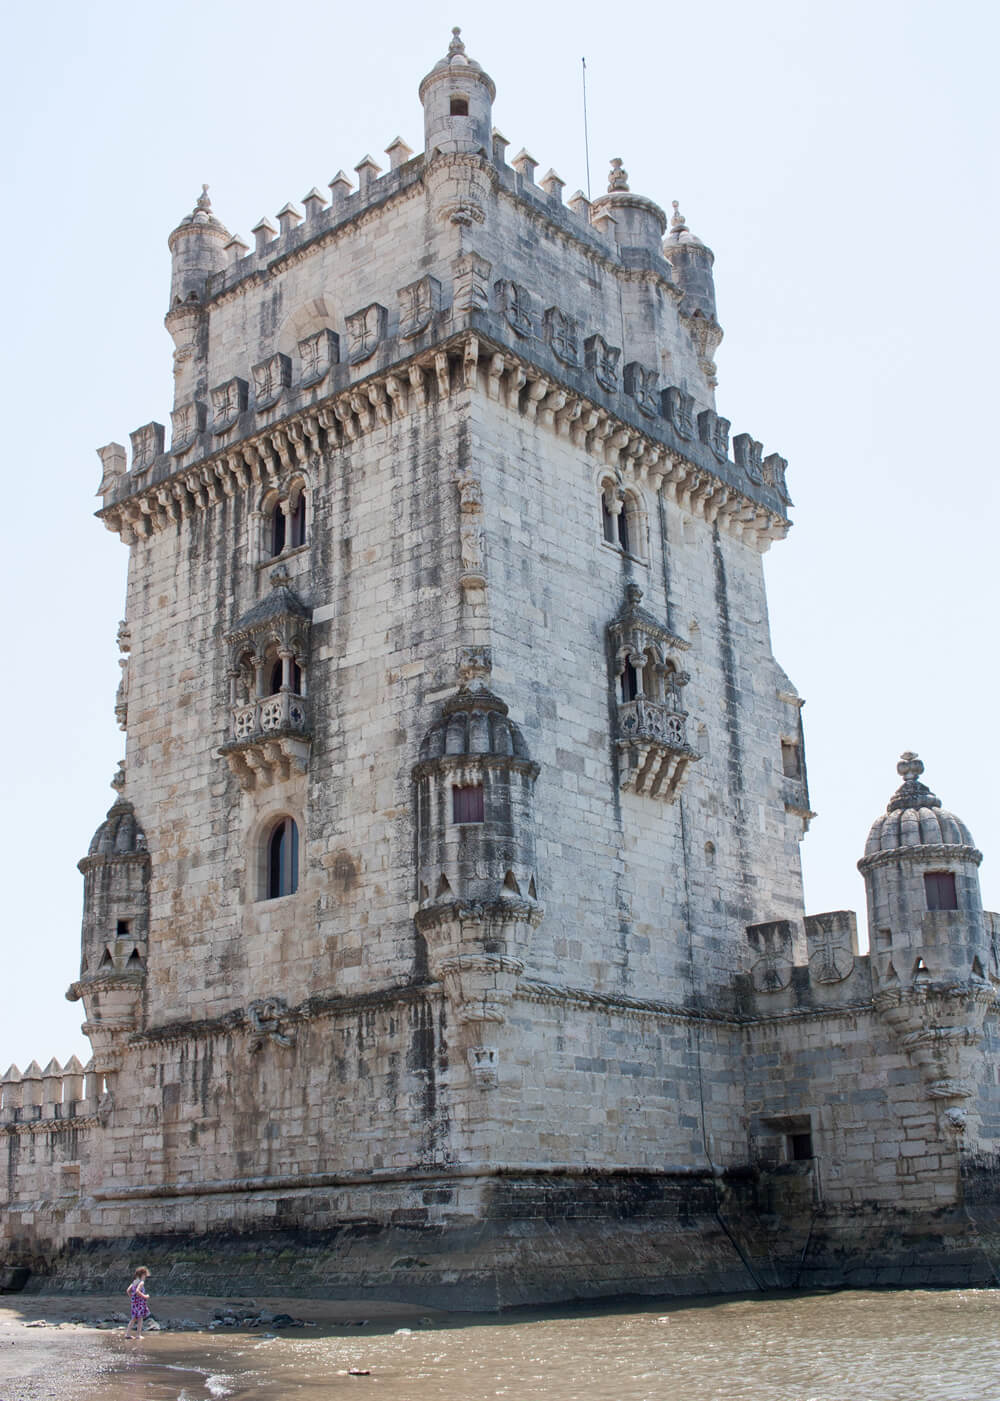 Torre de Belém in Lisbon